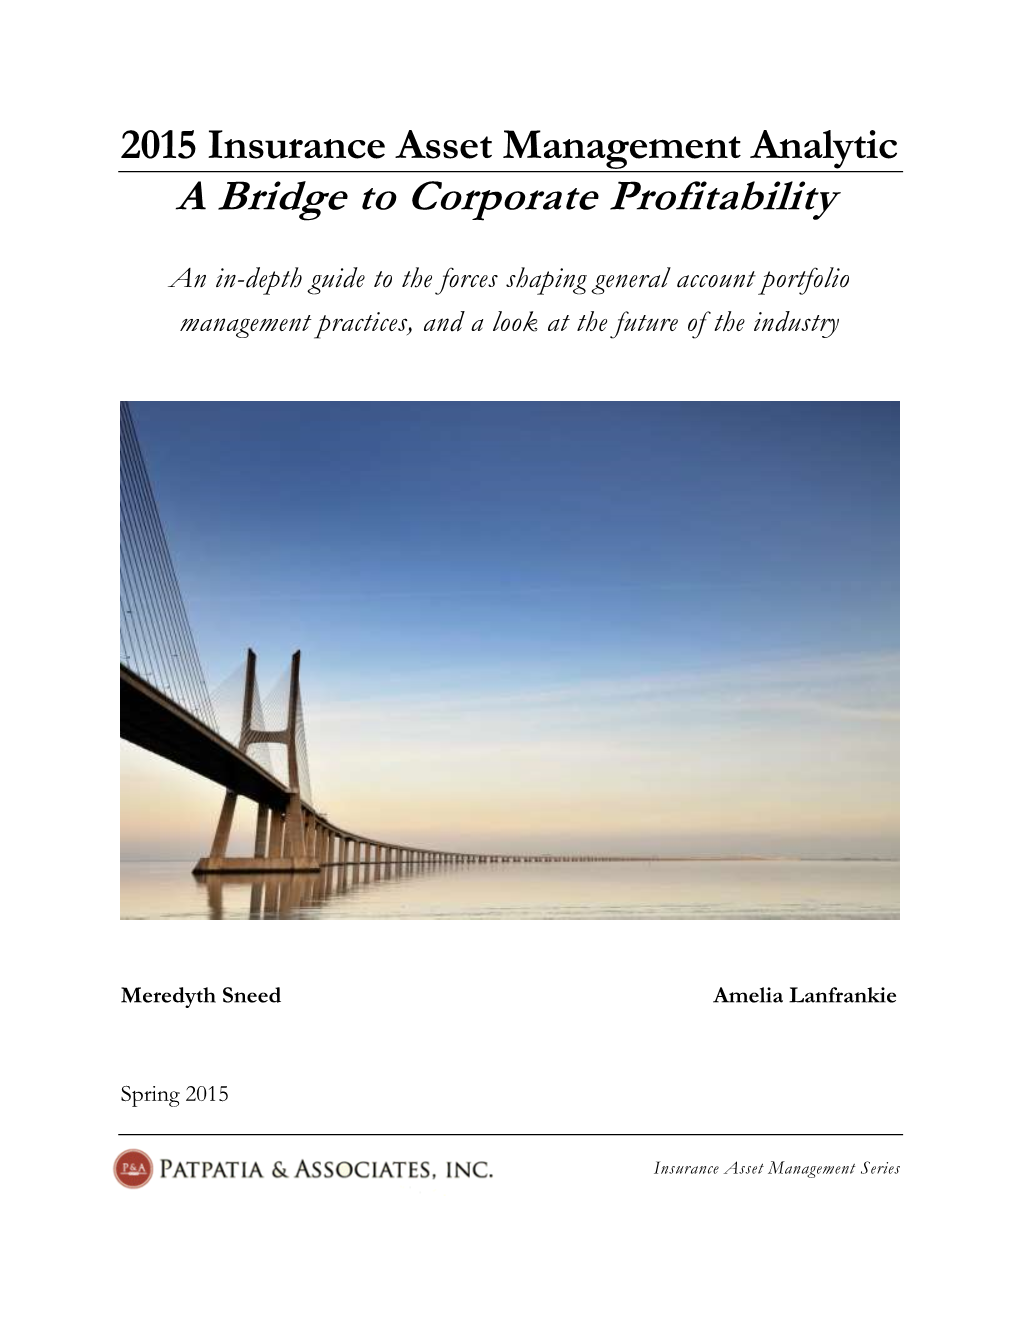 2015 Insurance Asset Management Analytic a Bridge to Corporate Profitability